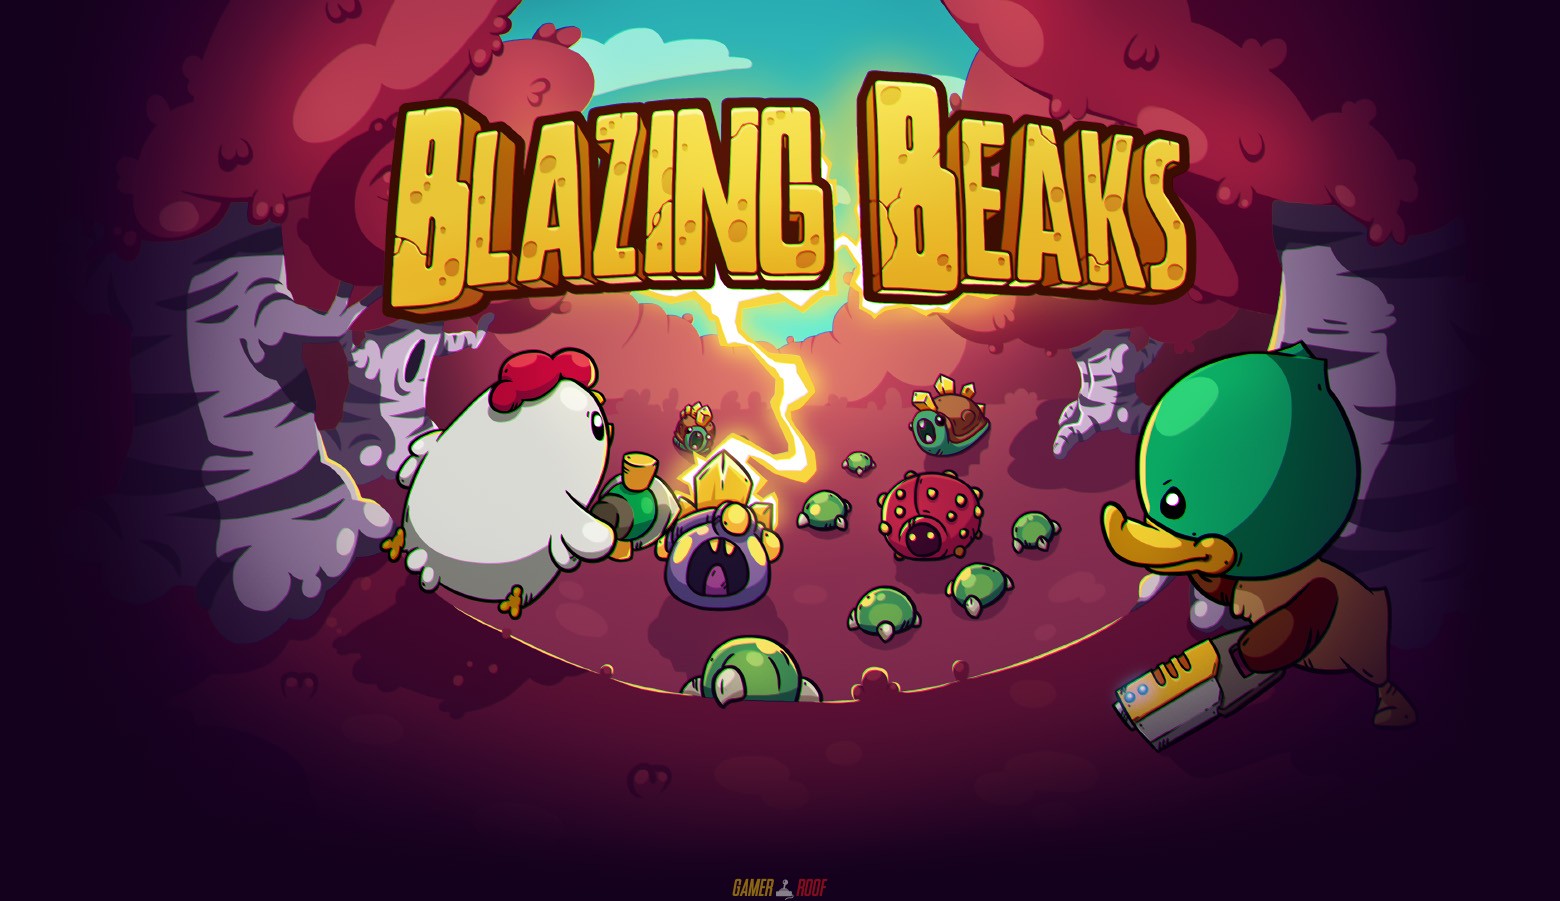 Blazing Beaks Wattam PS4 Version Full Game Free Download